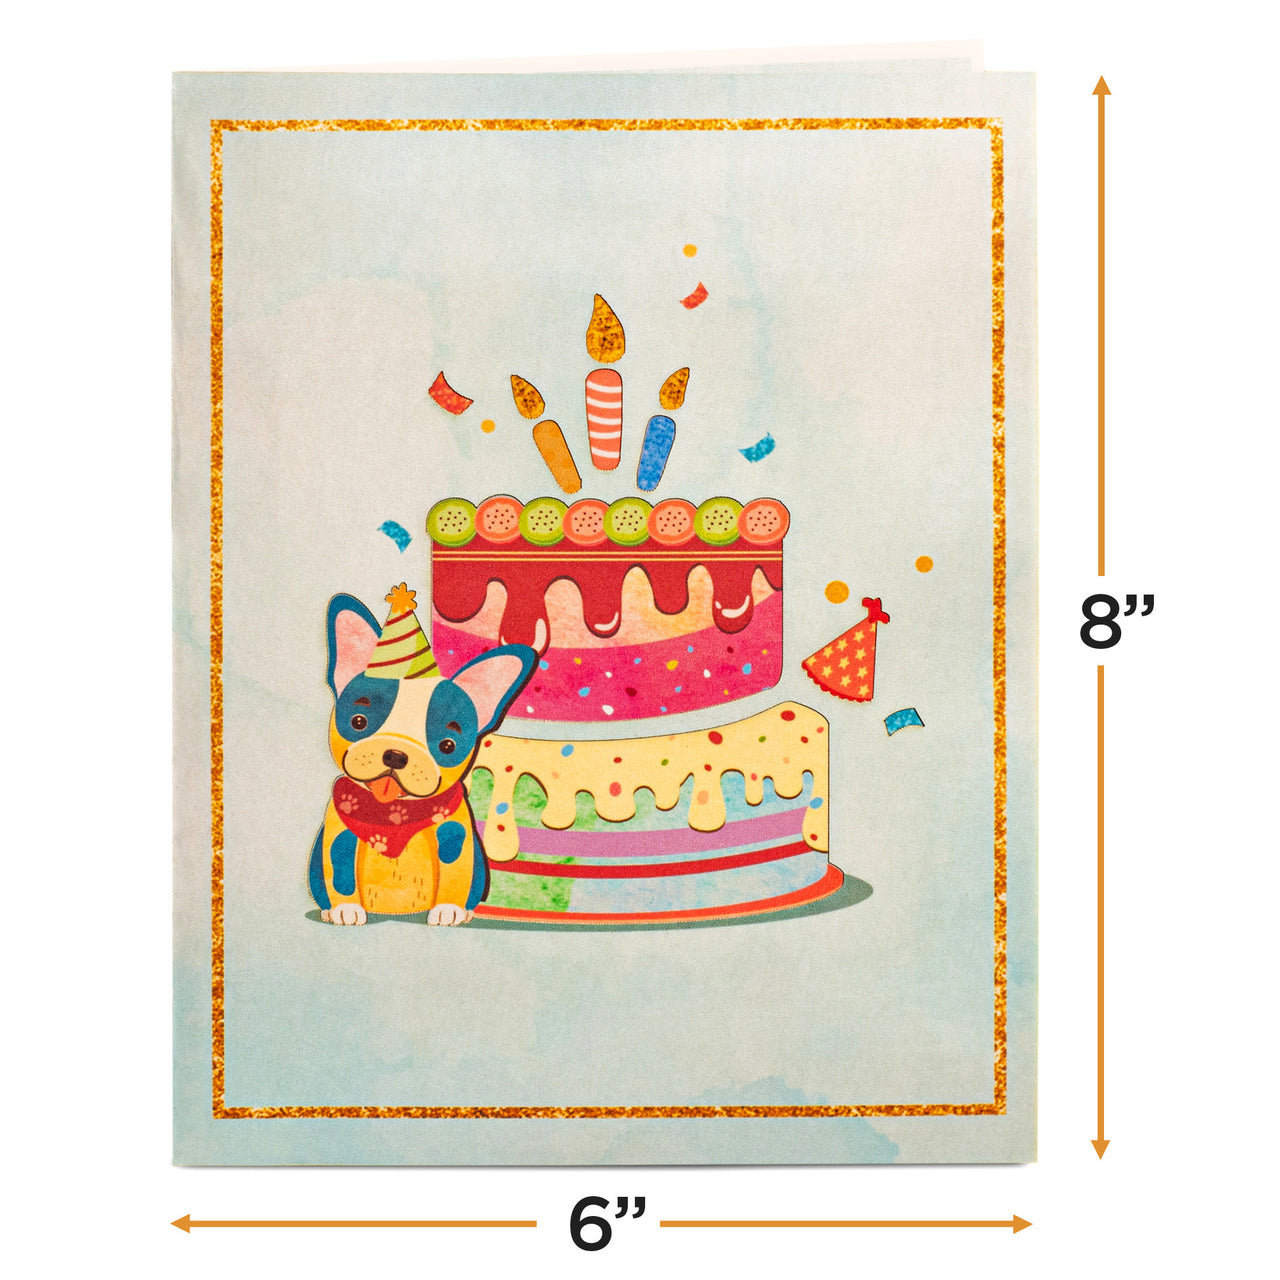 Dog Birthday Cake Pop Up Card